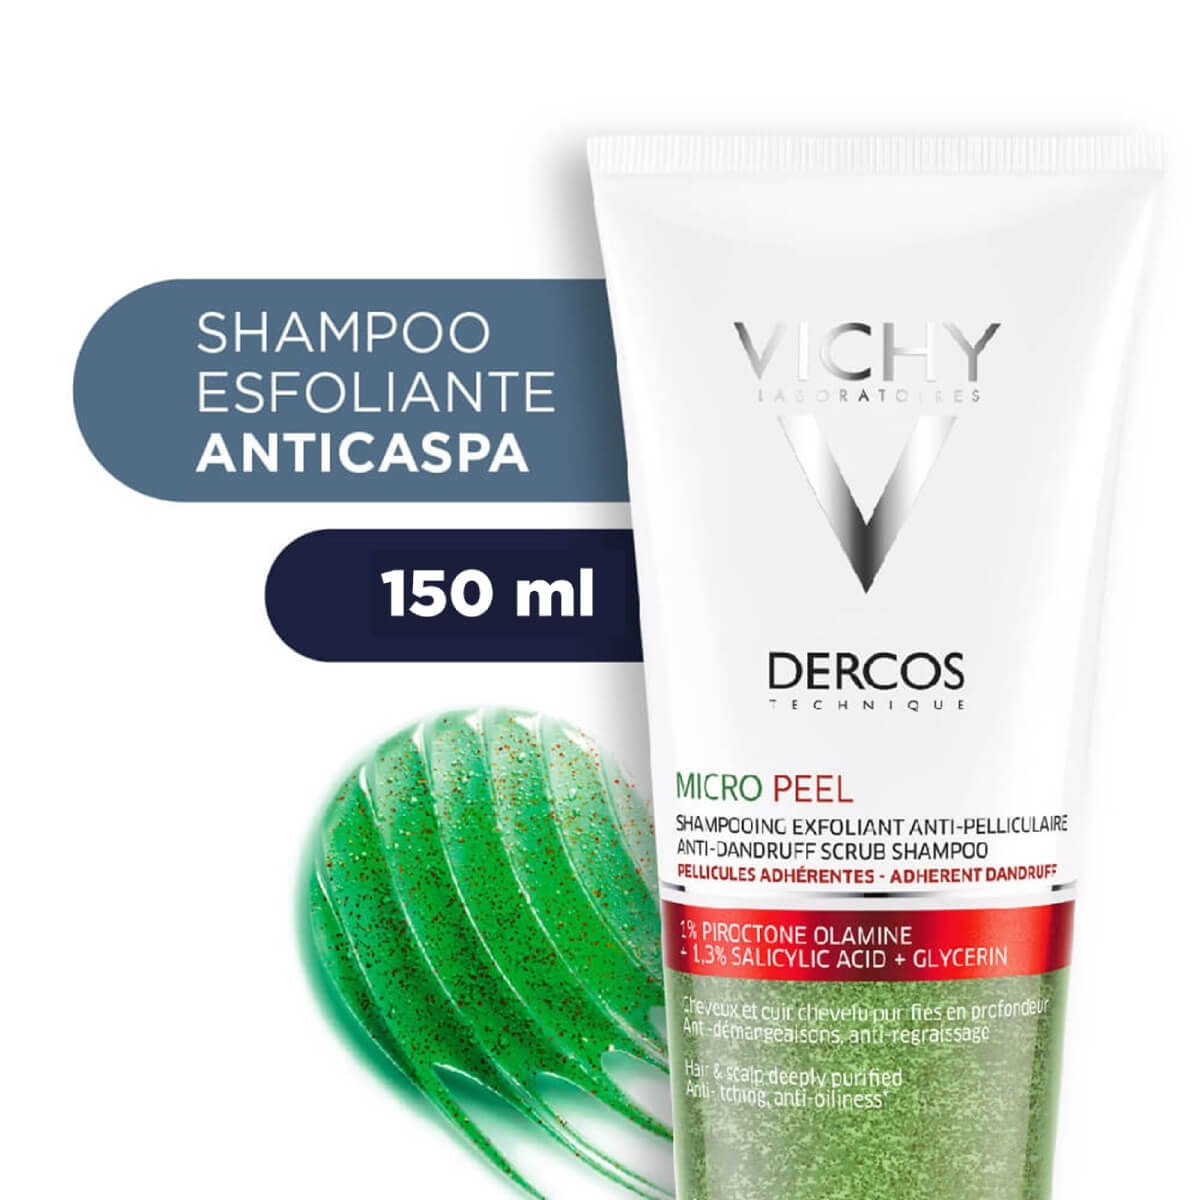 Shampoo Esfoliante Anticaspa Vichy Dercos Micro Peel 150ml | Drogafuji